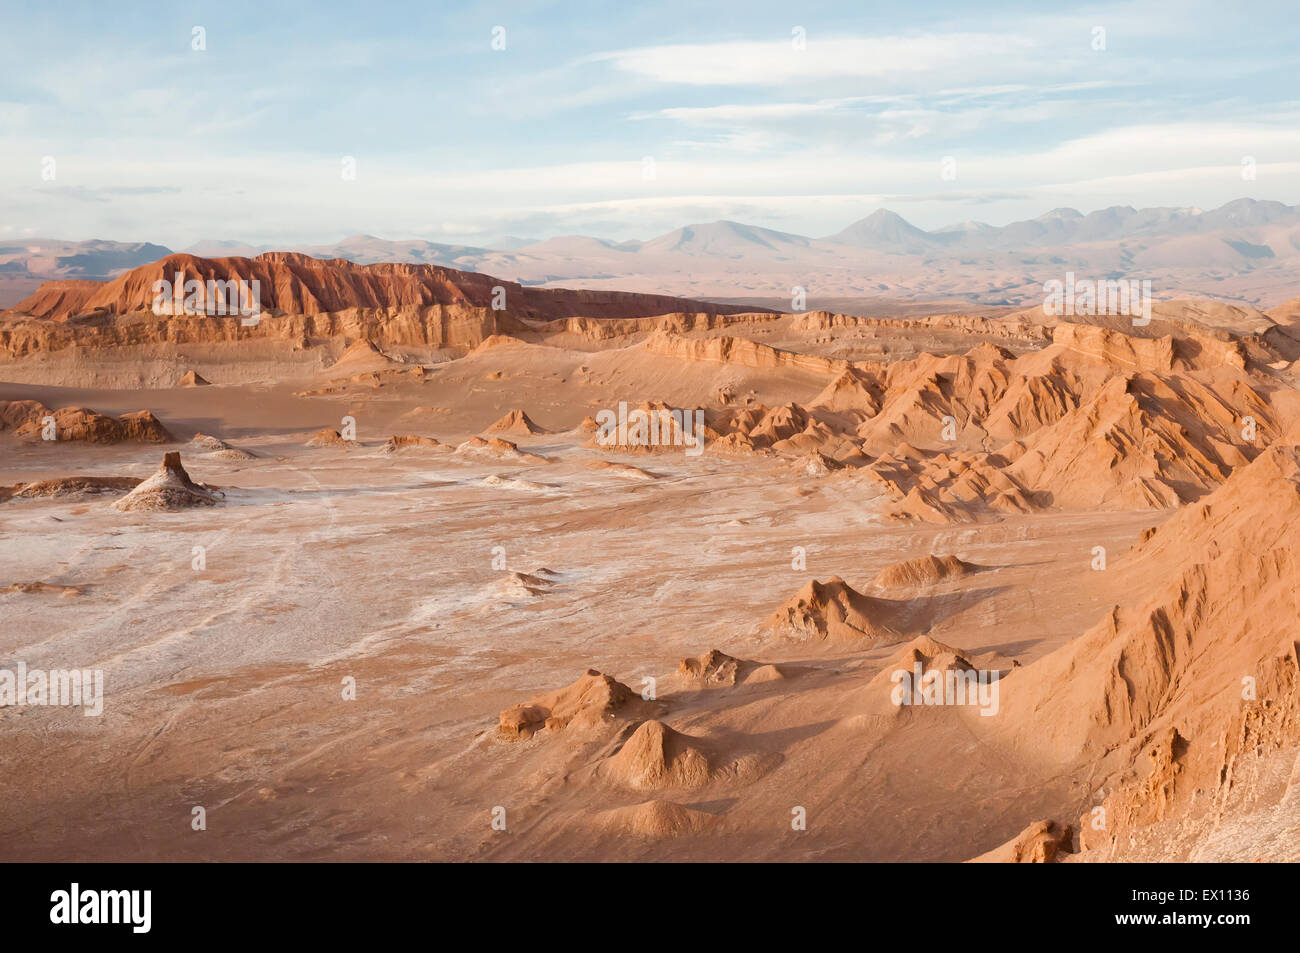 Valley of the Moon - Atacama Desert - Chile Stock Photo